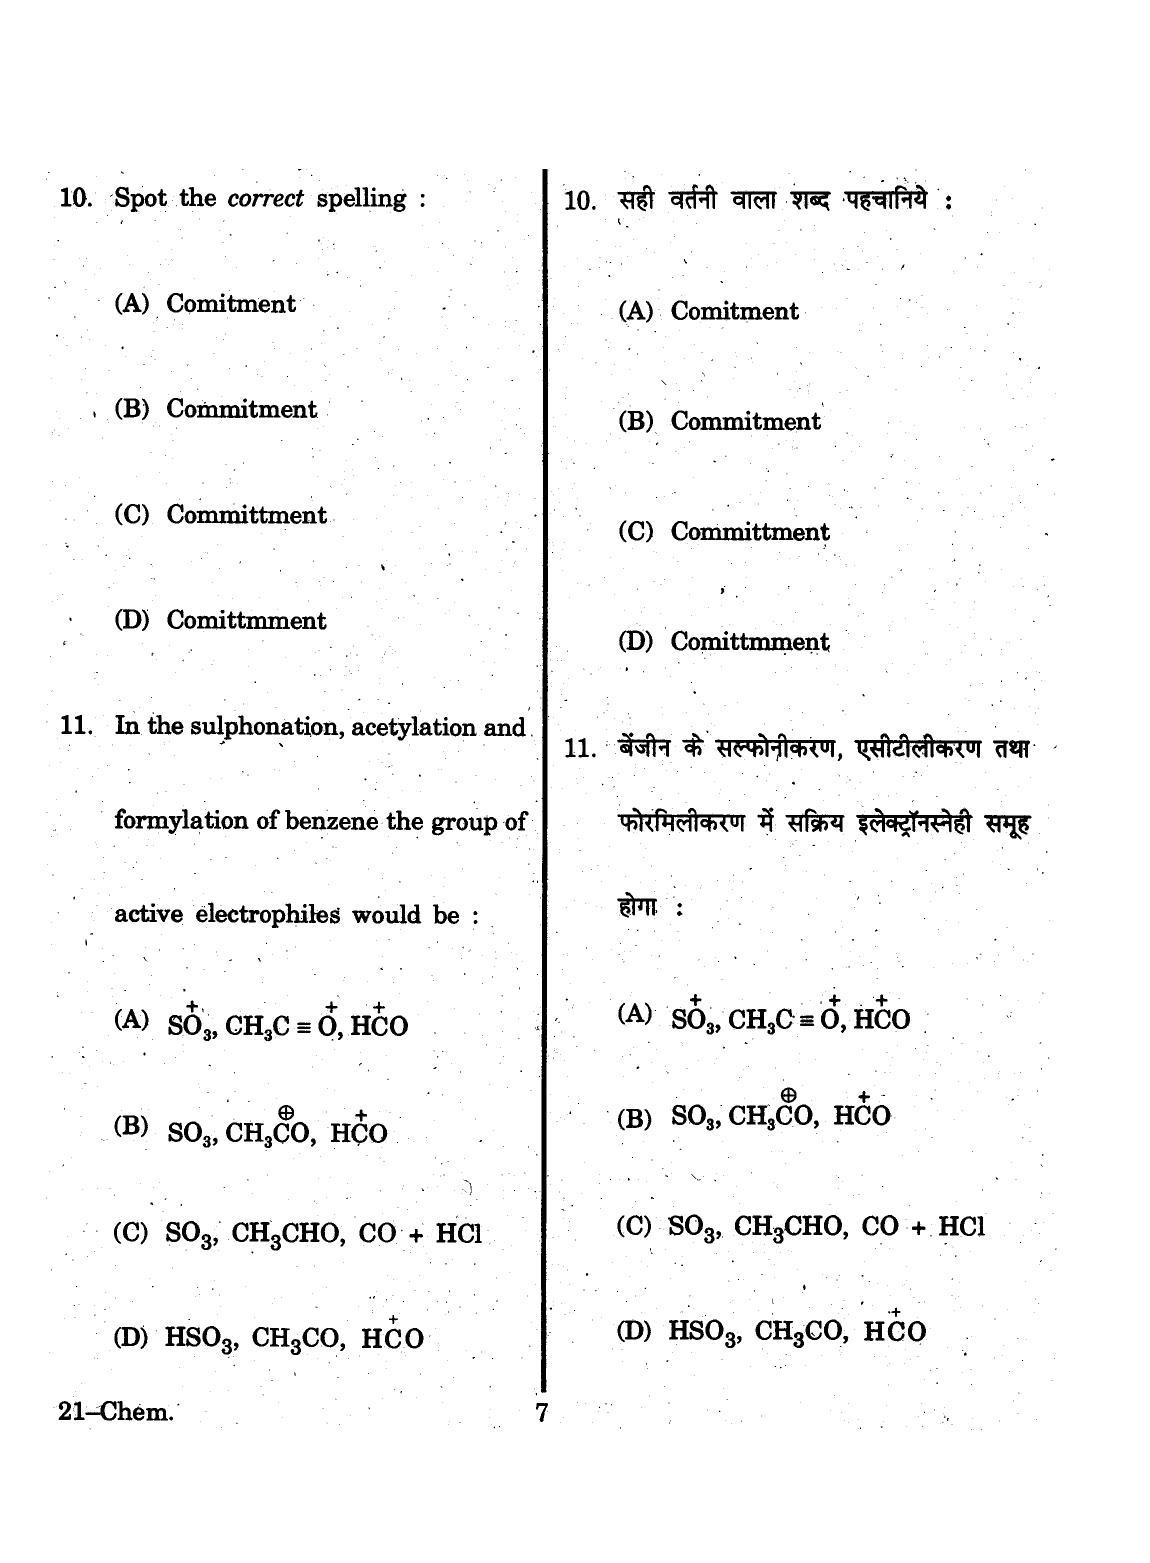 URATPG 2015 Chemisty Question Paper - Page 7